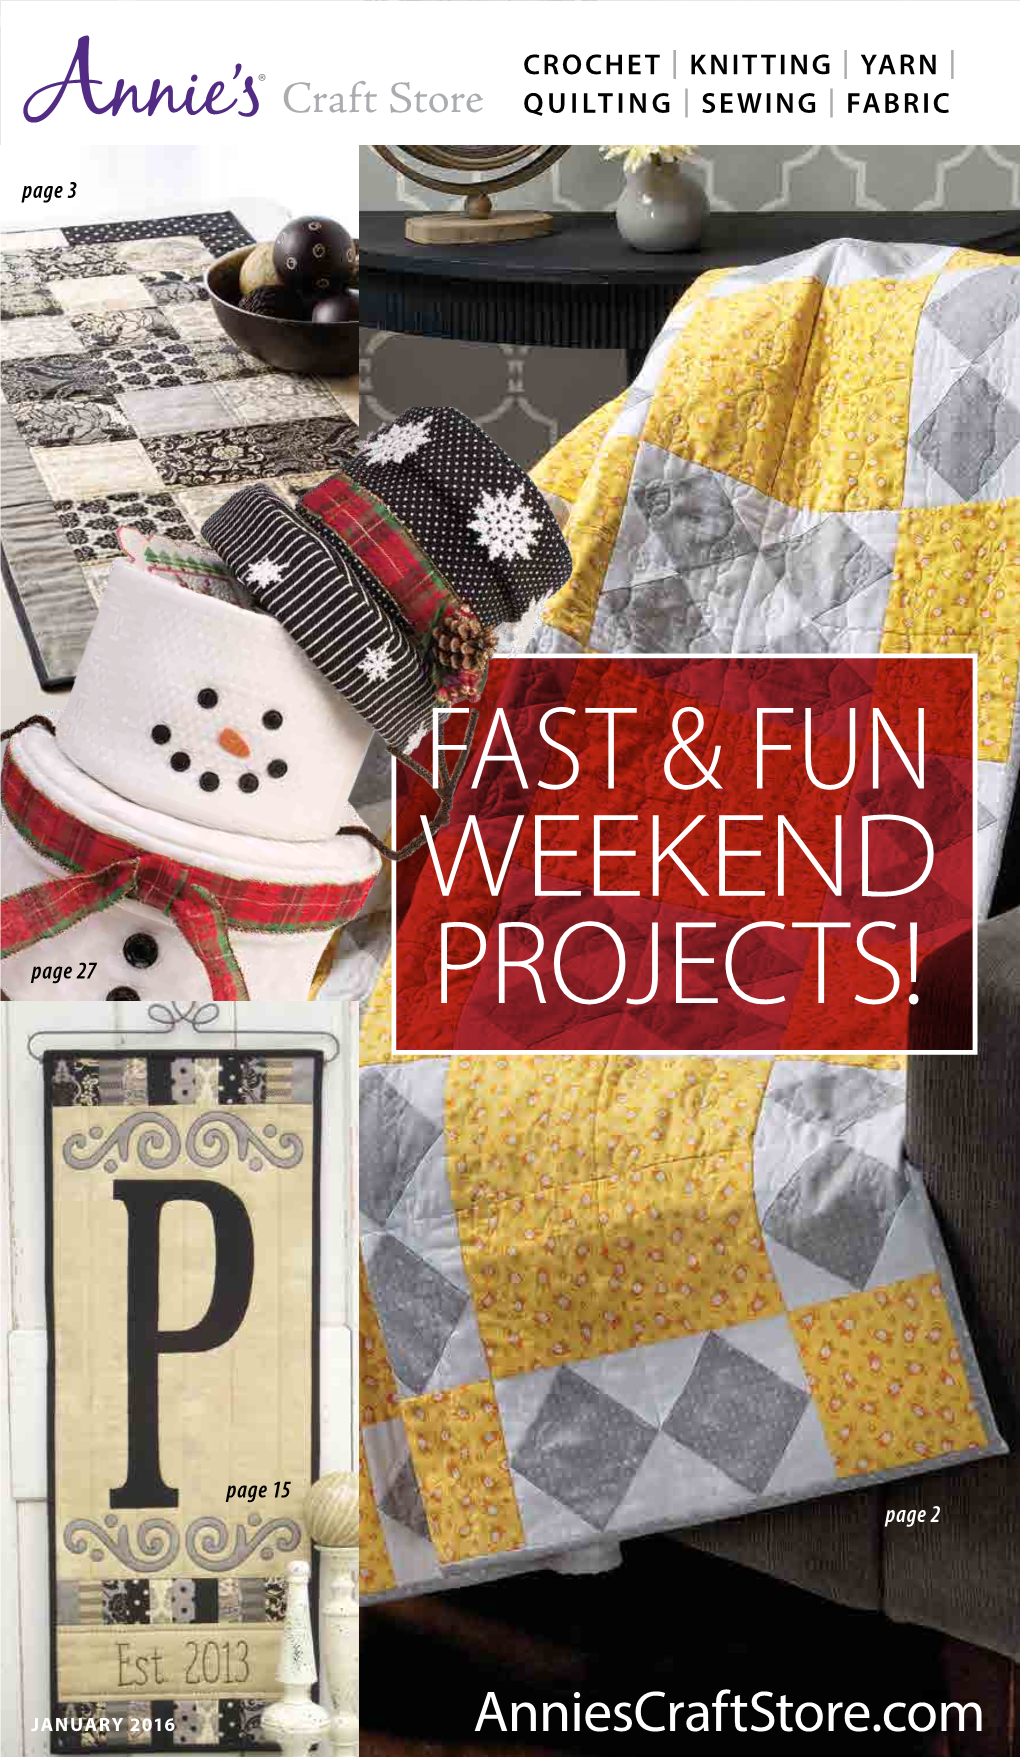 Fast & Fun Weekend Projects!